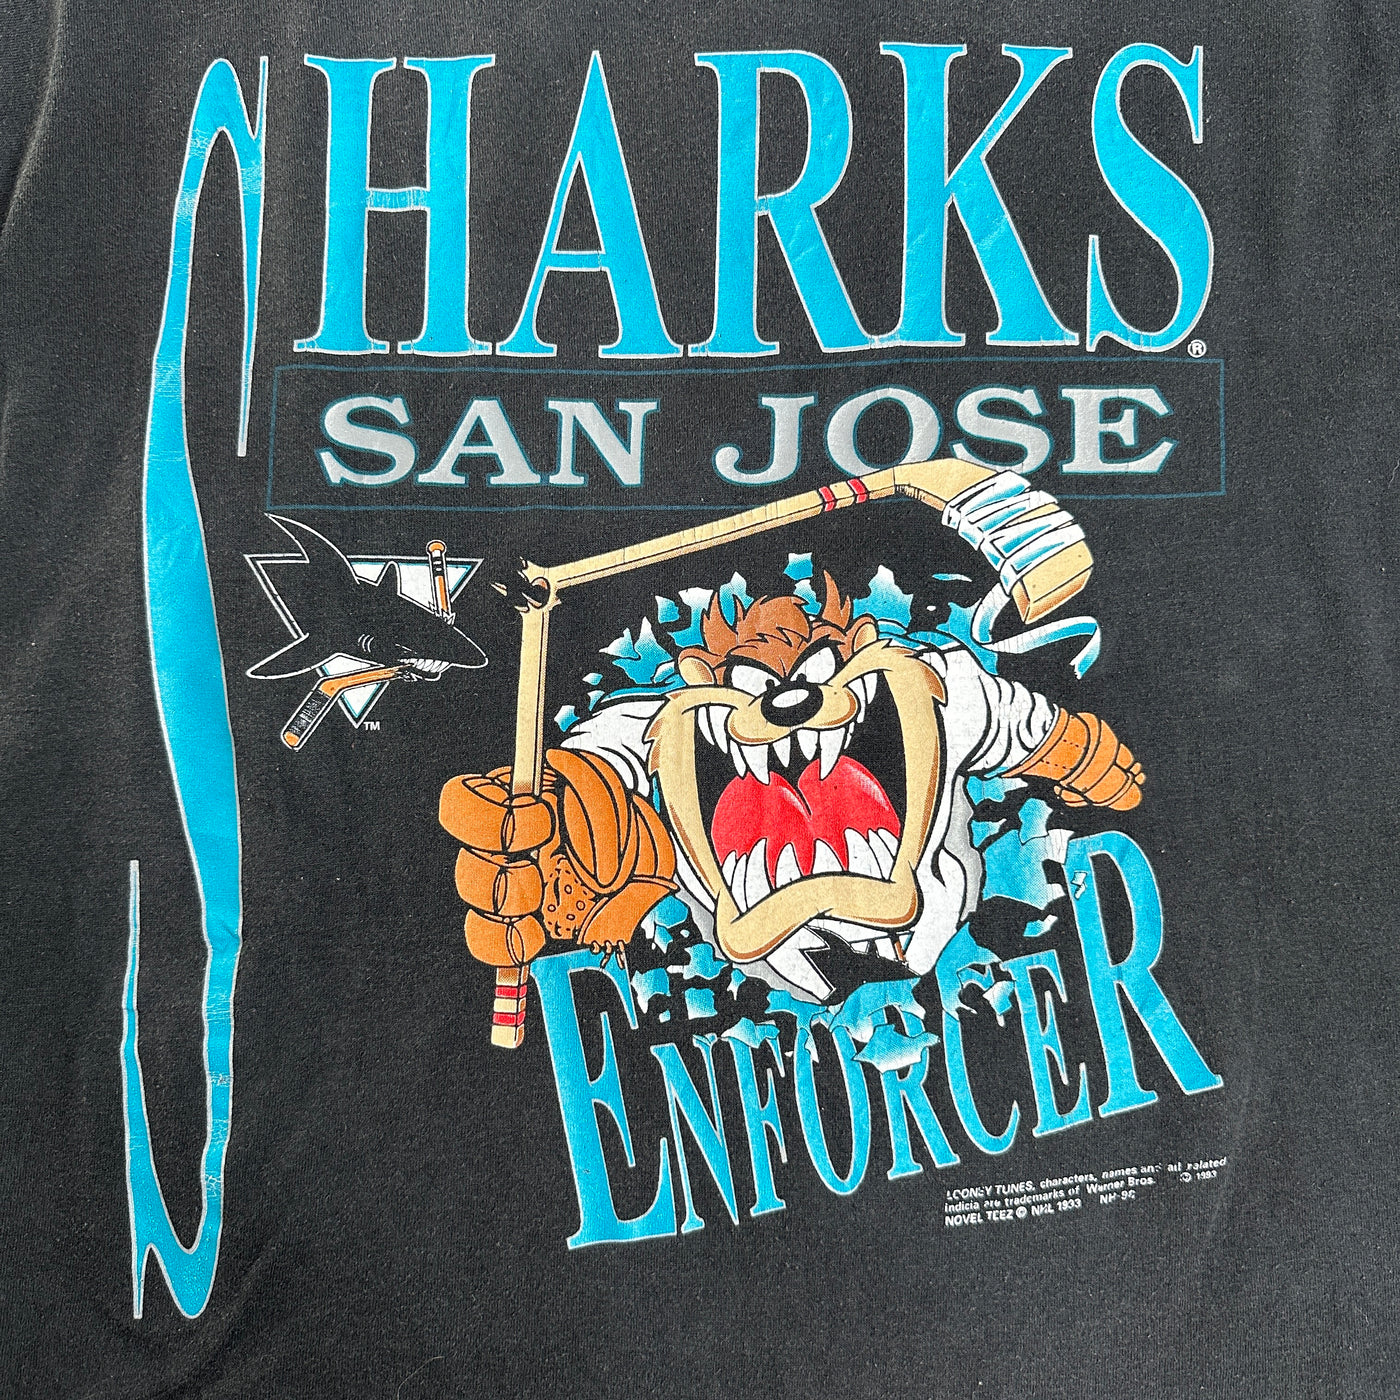 90's Taz San Jose Sharks Black Cartoon Sports T-shirt sz M